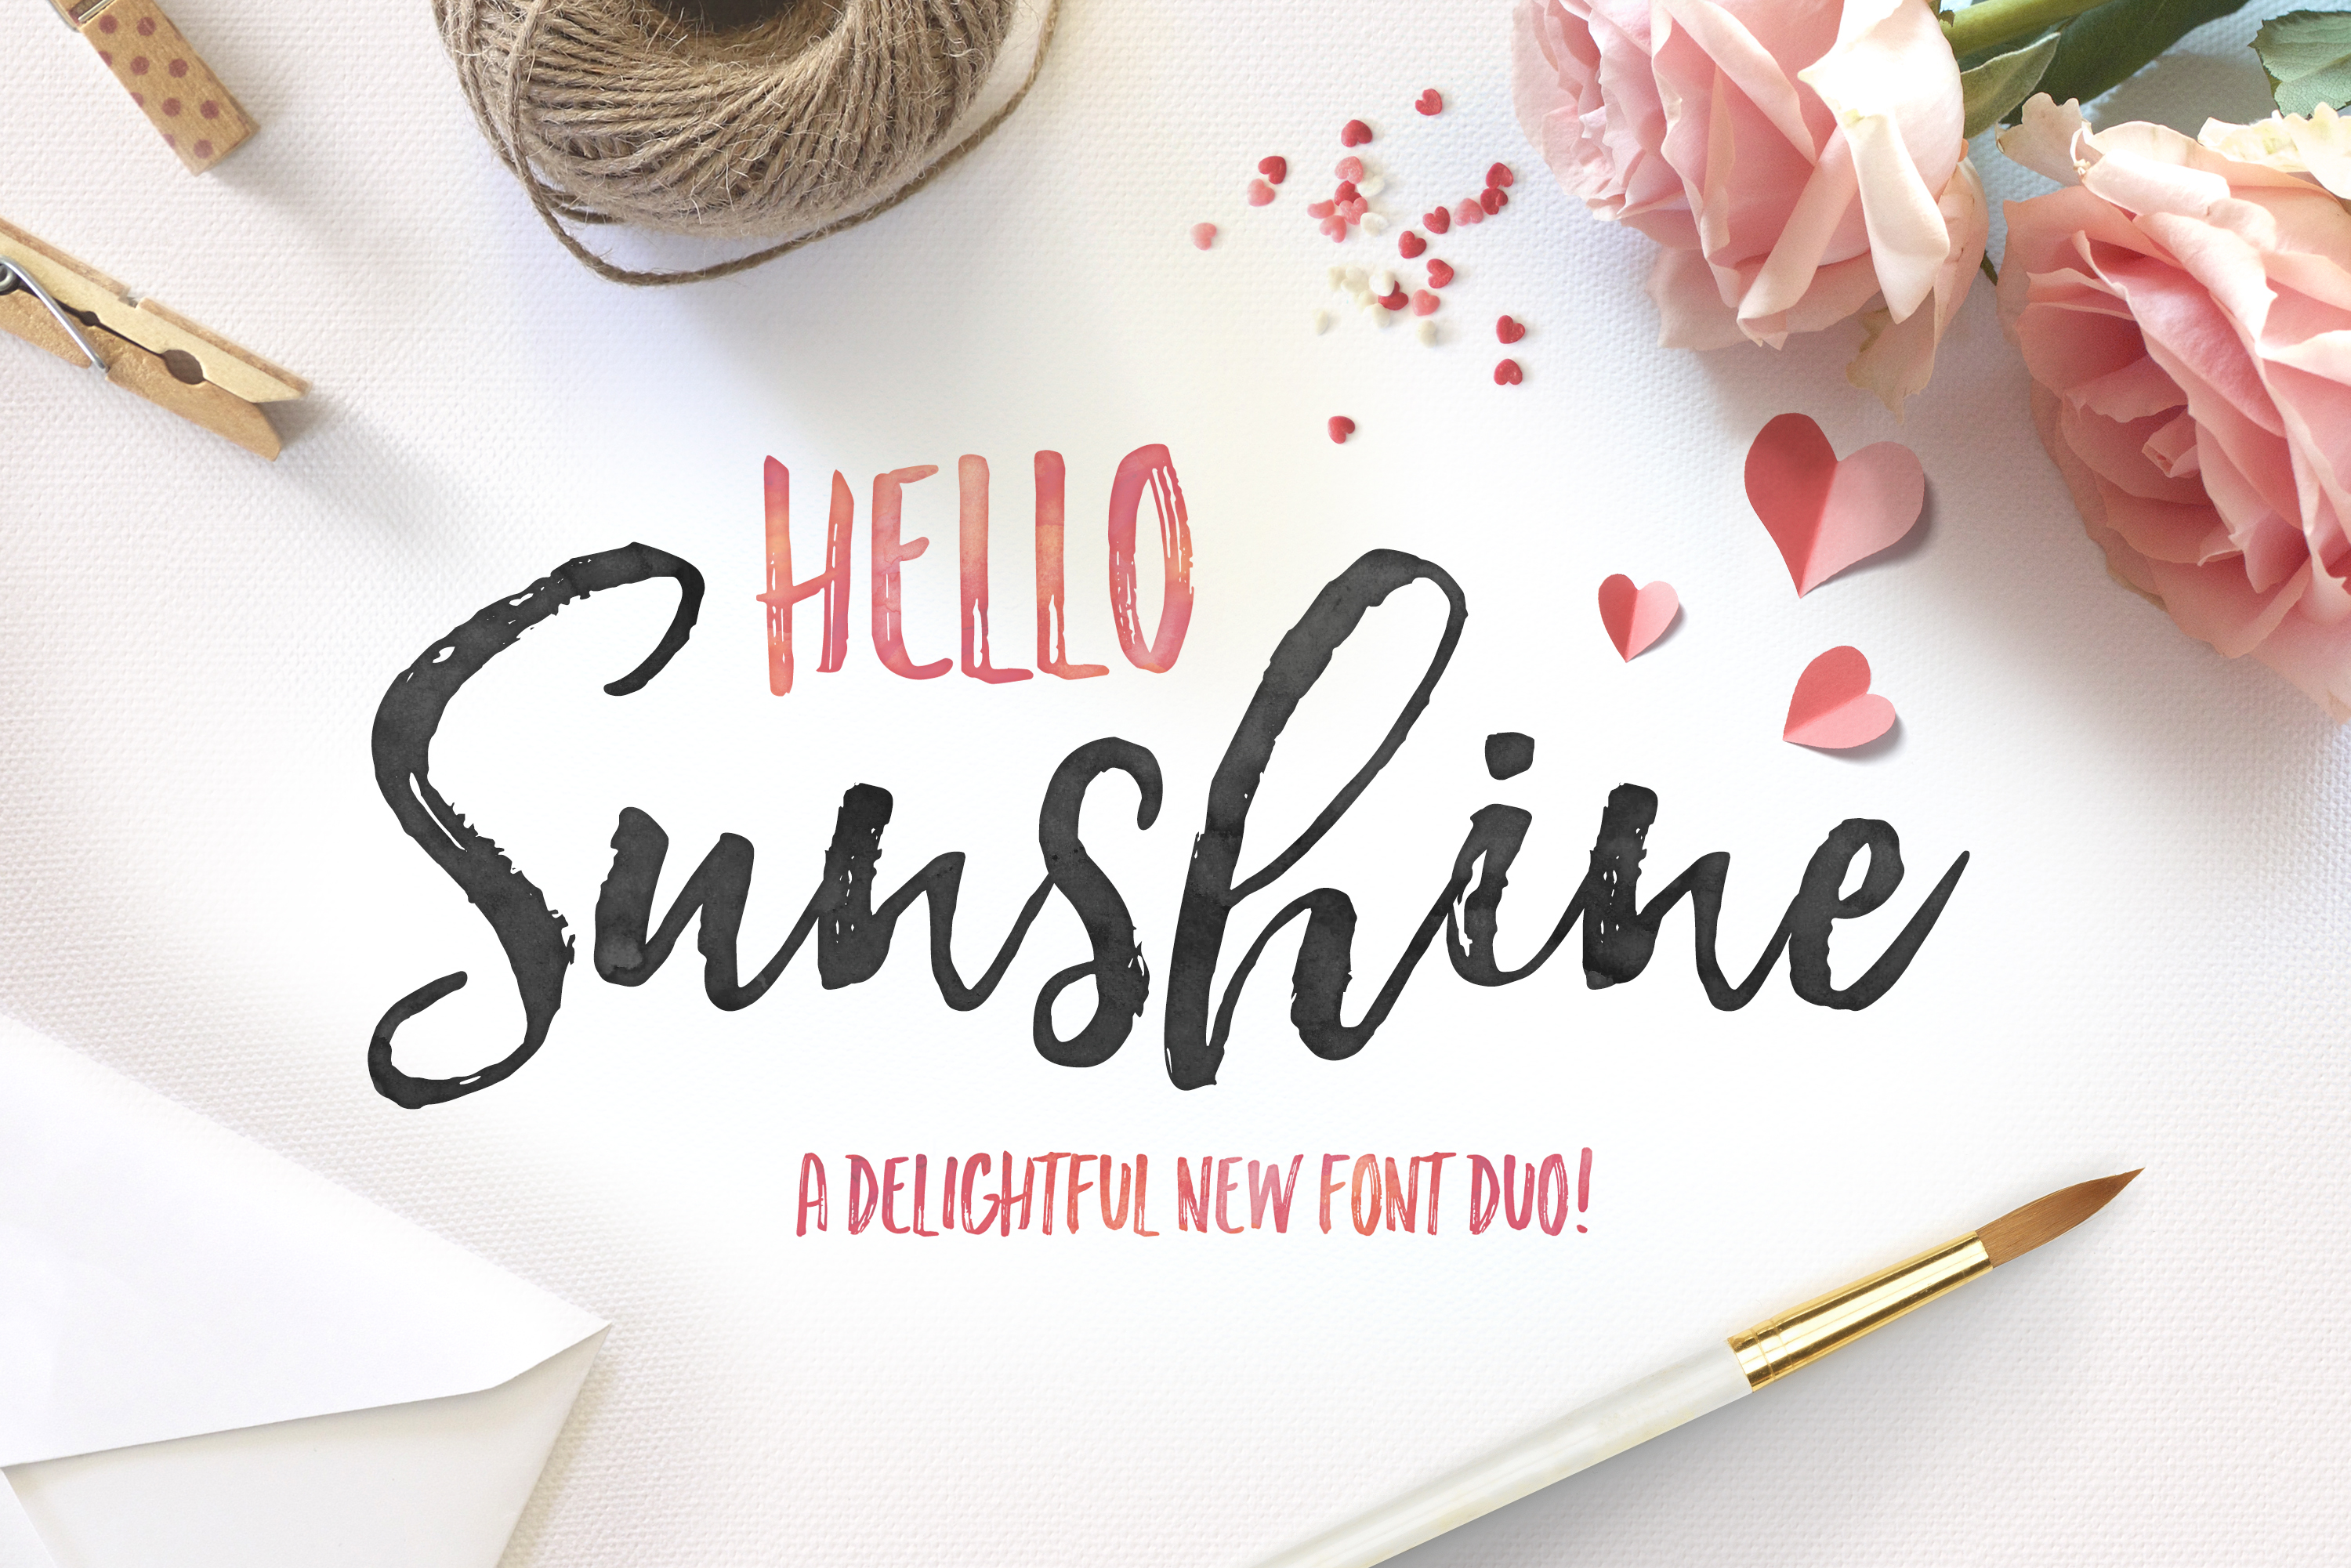 Hello-Sunshine-font-duo-by-Nicky-Laatz